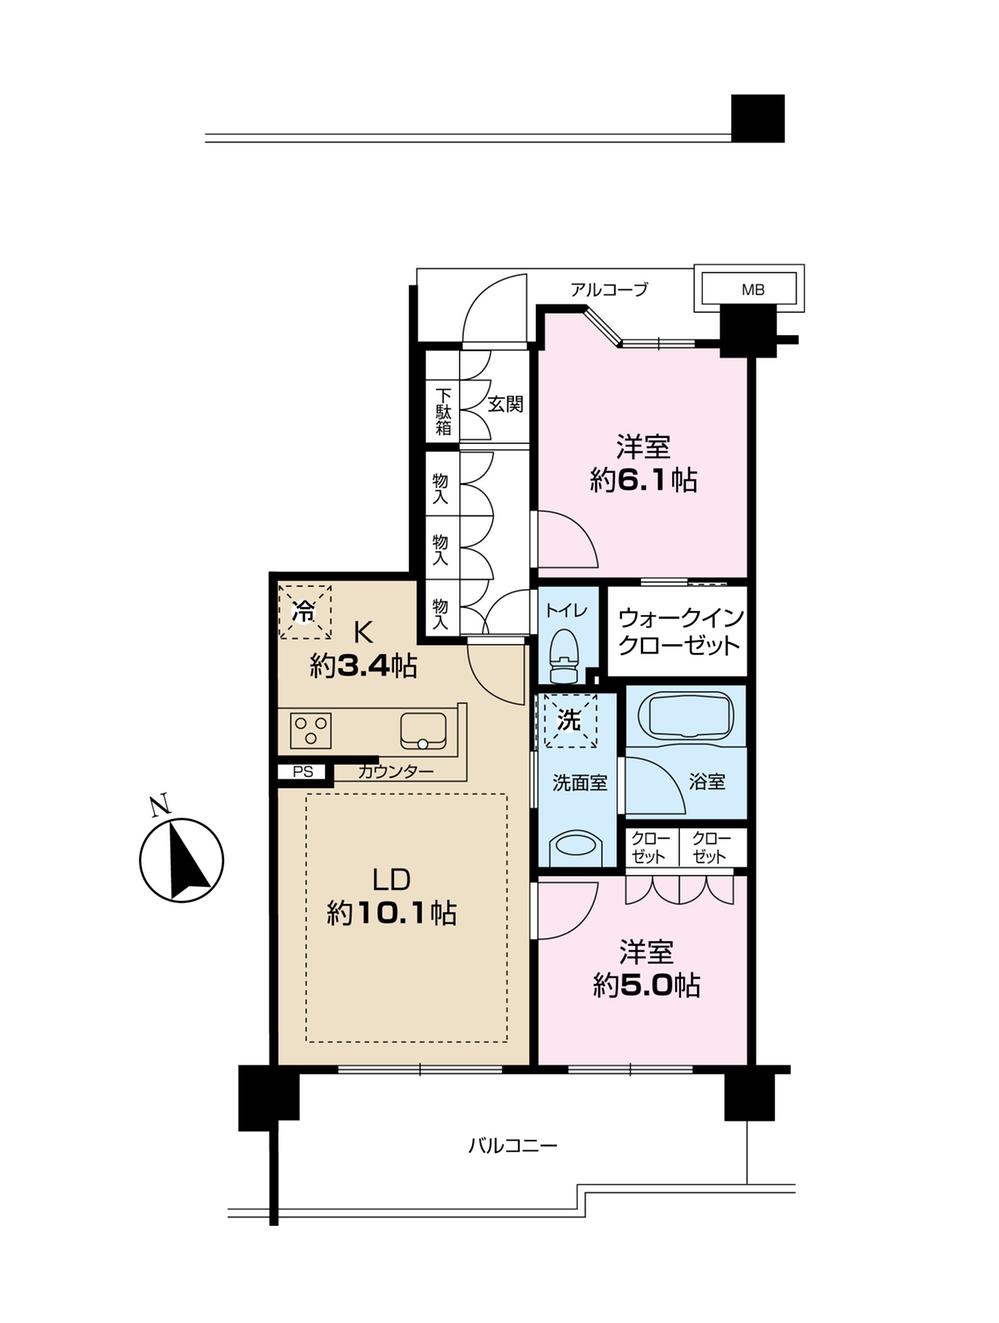 Floor plan. 2LDK, Price 29,800,000 yen, Occupied area 58.56 sq m , Balcony area 12.12 sq m